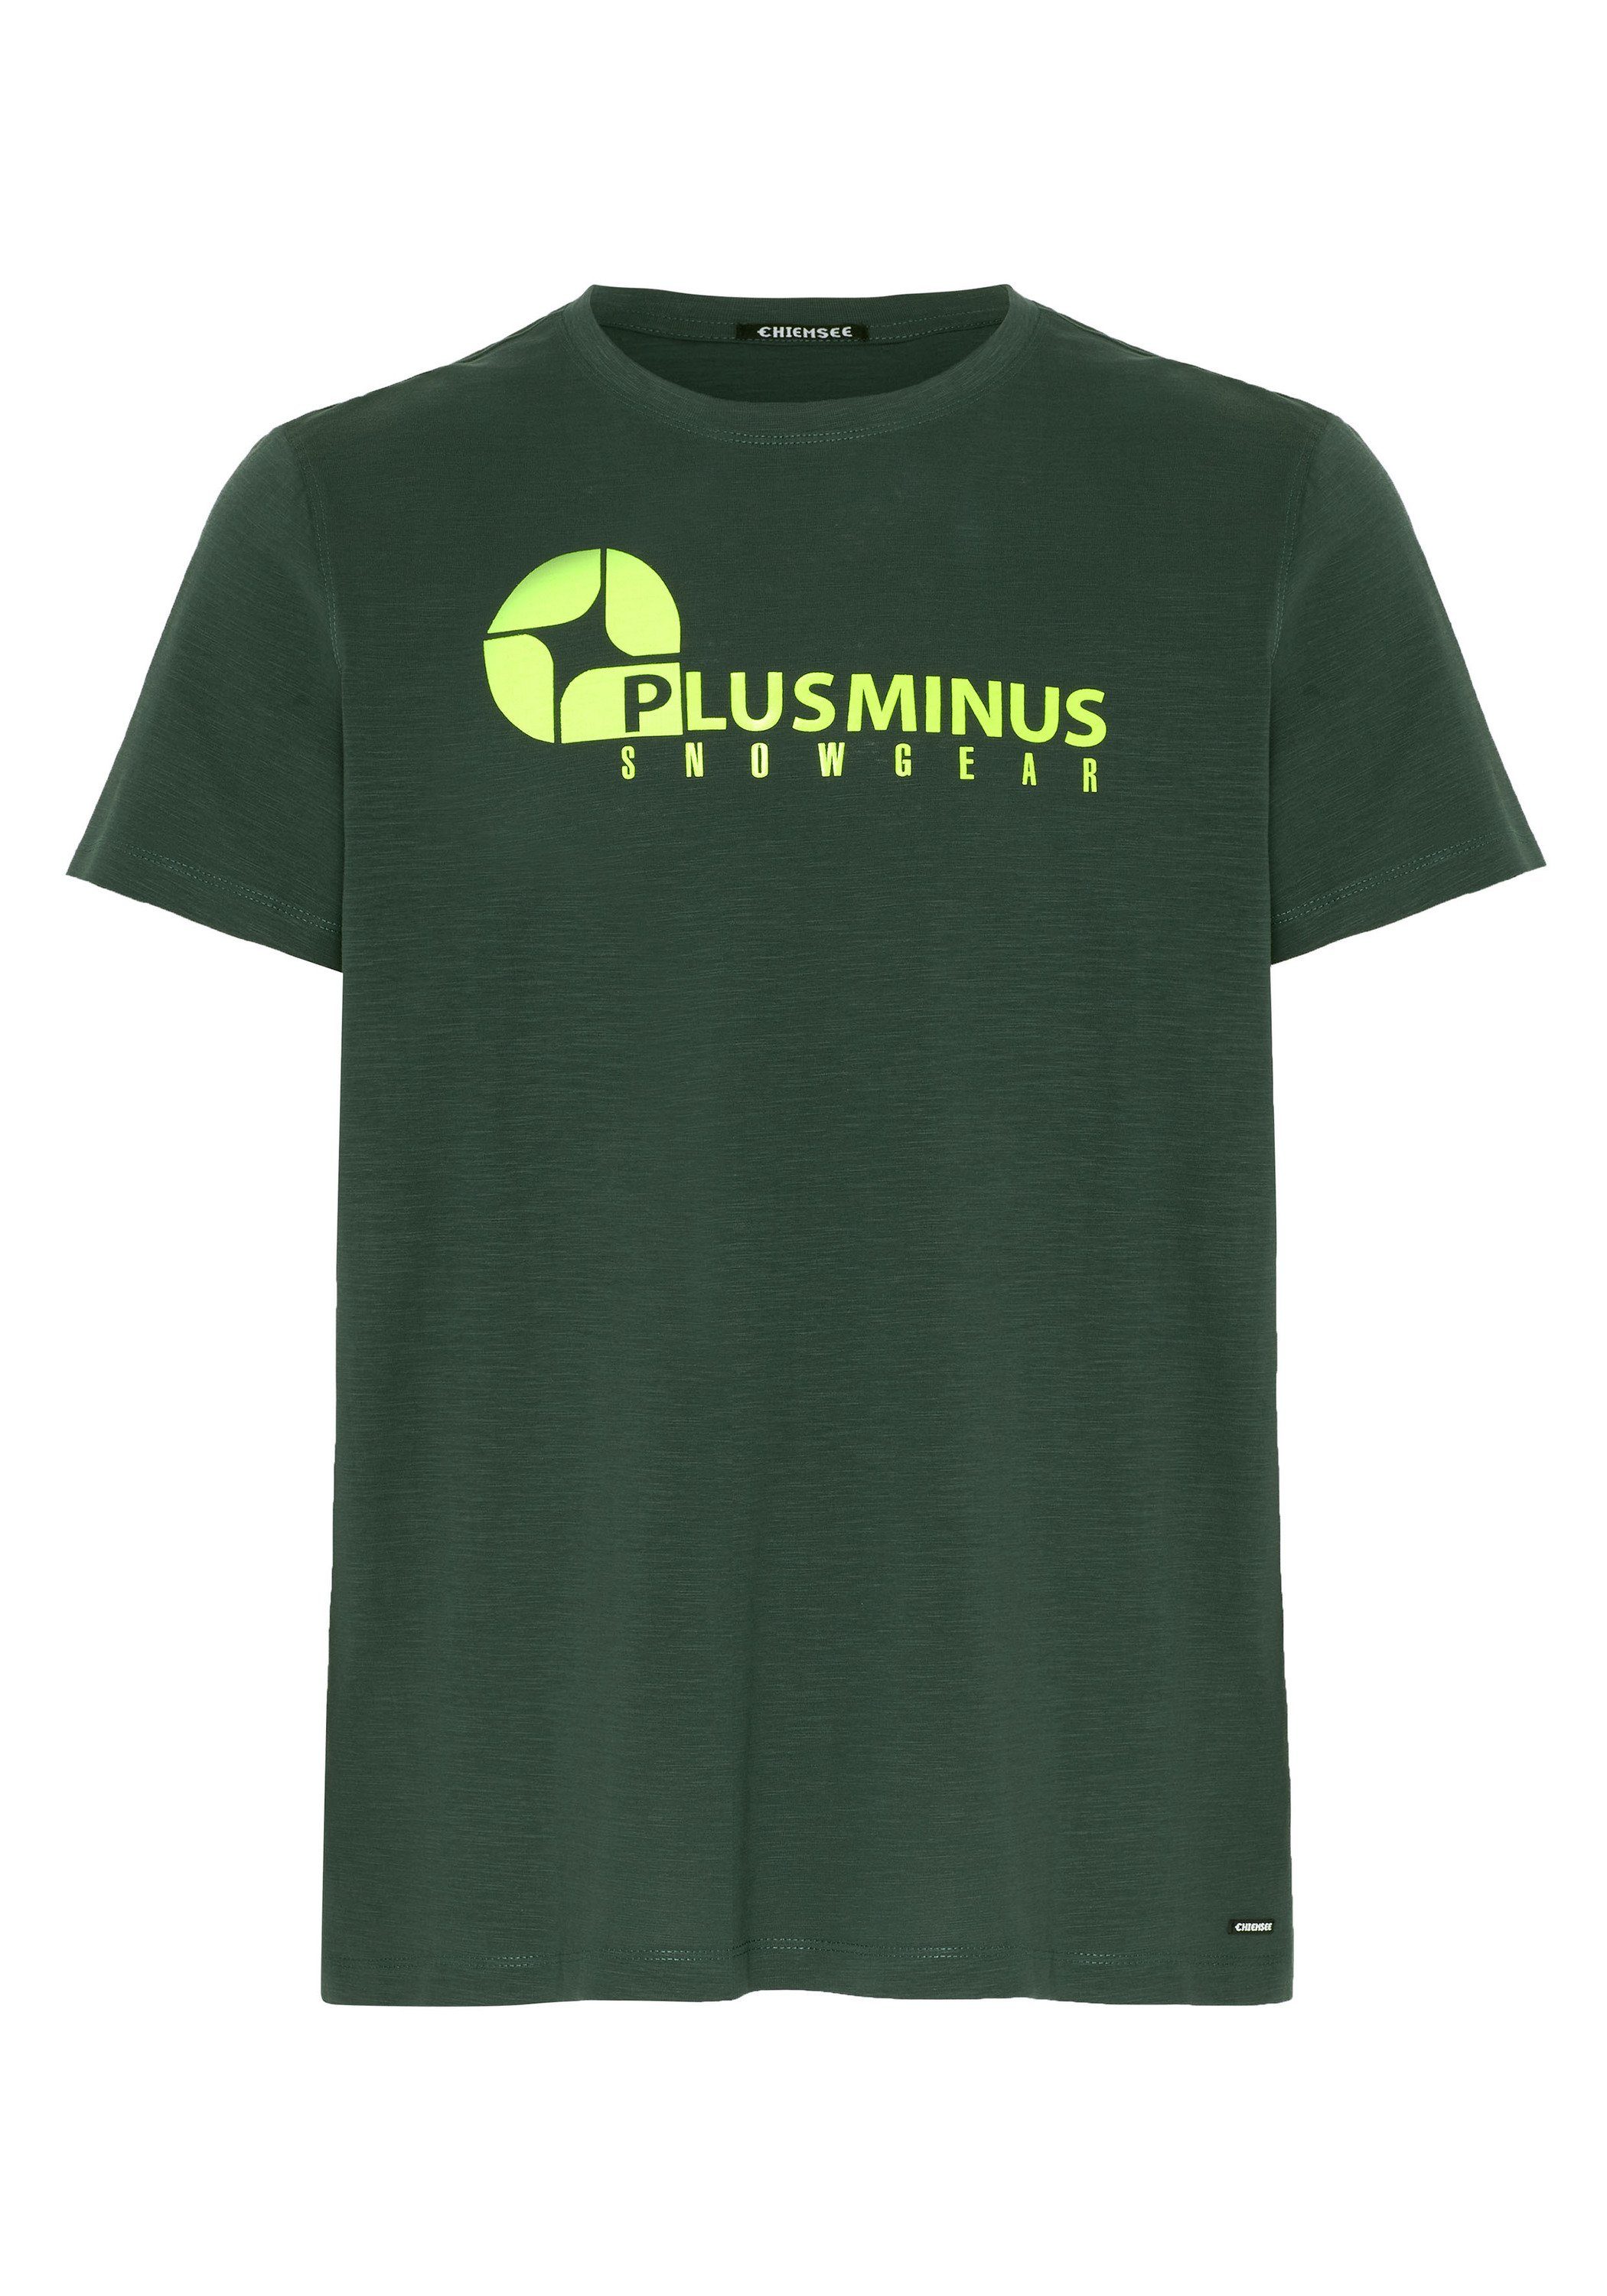 Chiemsee Print-Shirt T-Shirt im PLUS-MINUS-Design Green Gables 1